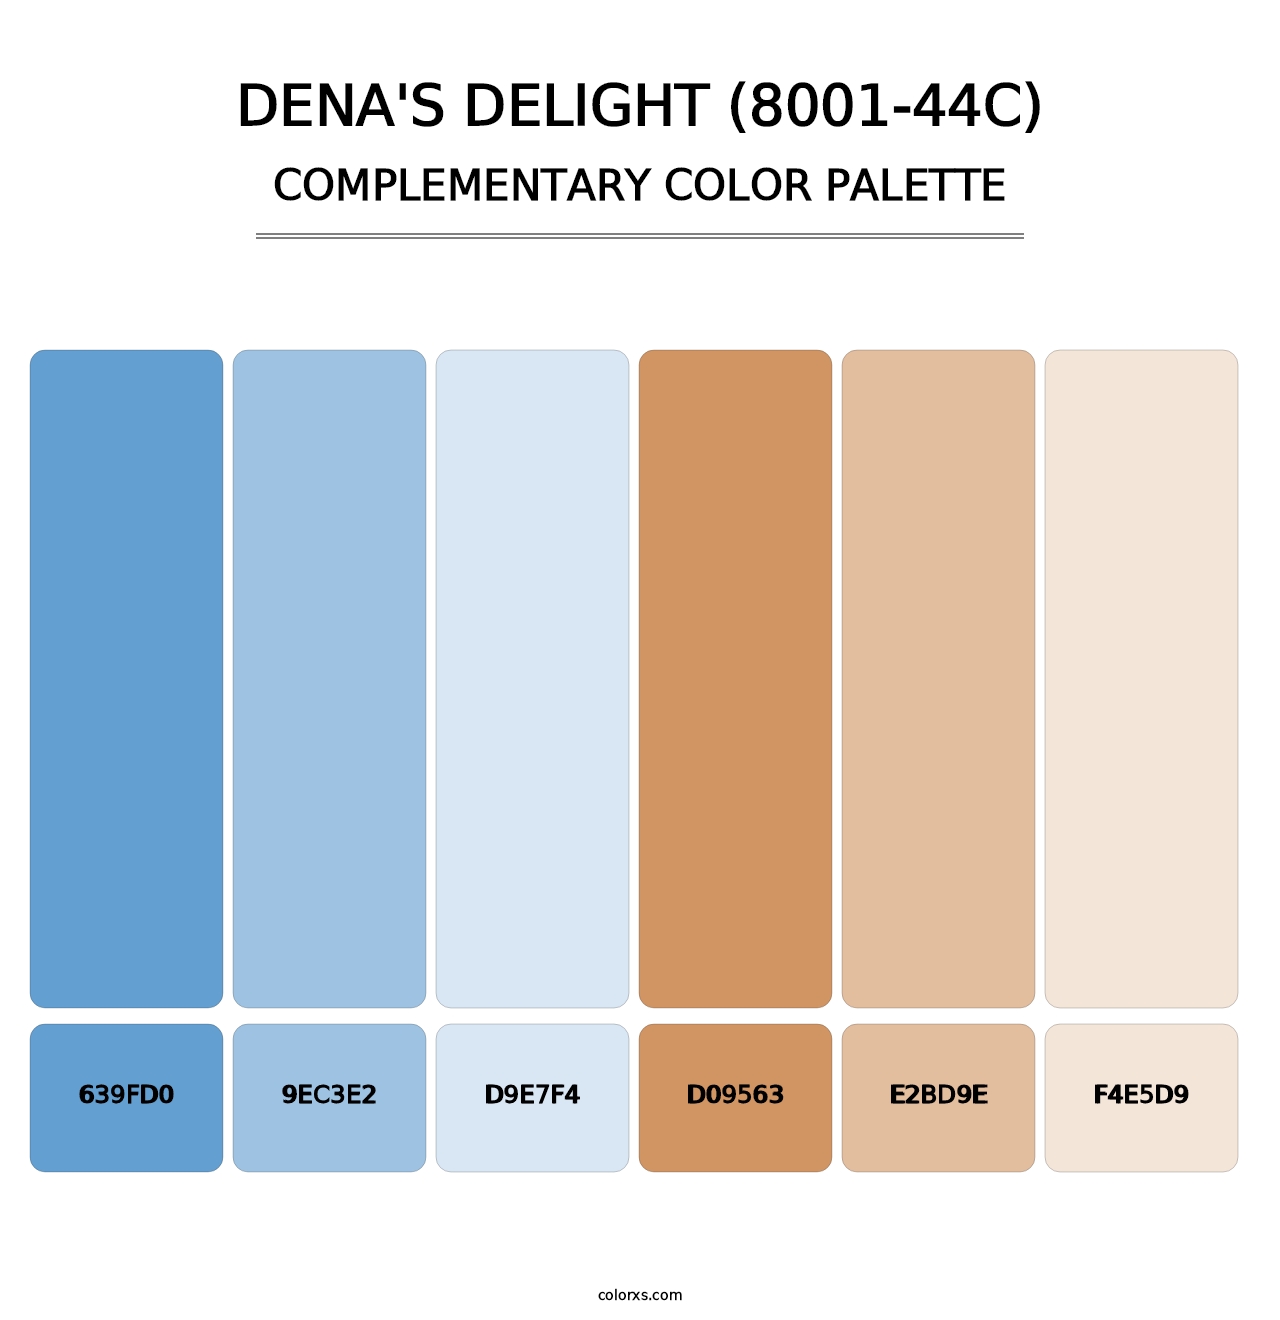 Dena's Delight (8001-44C) - Complementary Color Palette